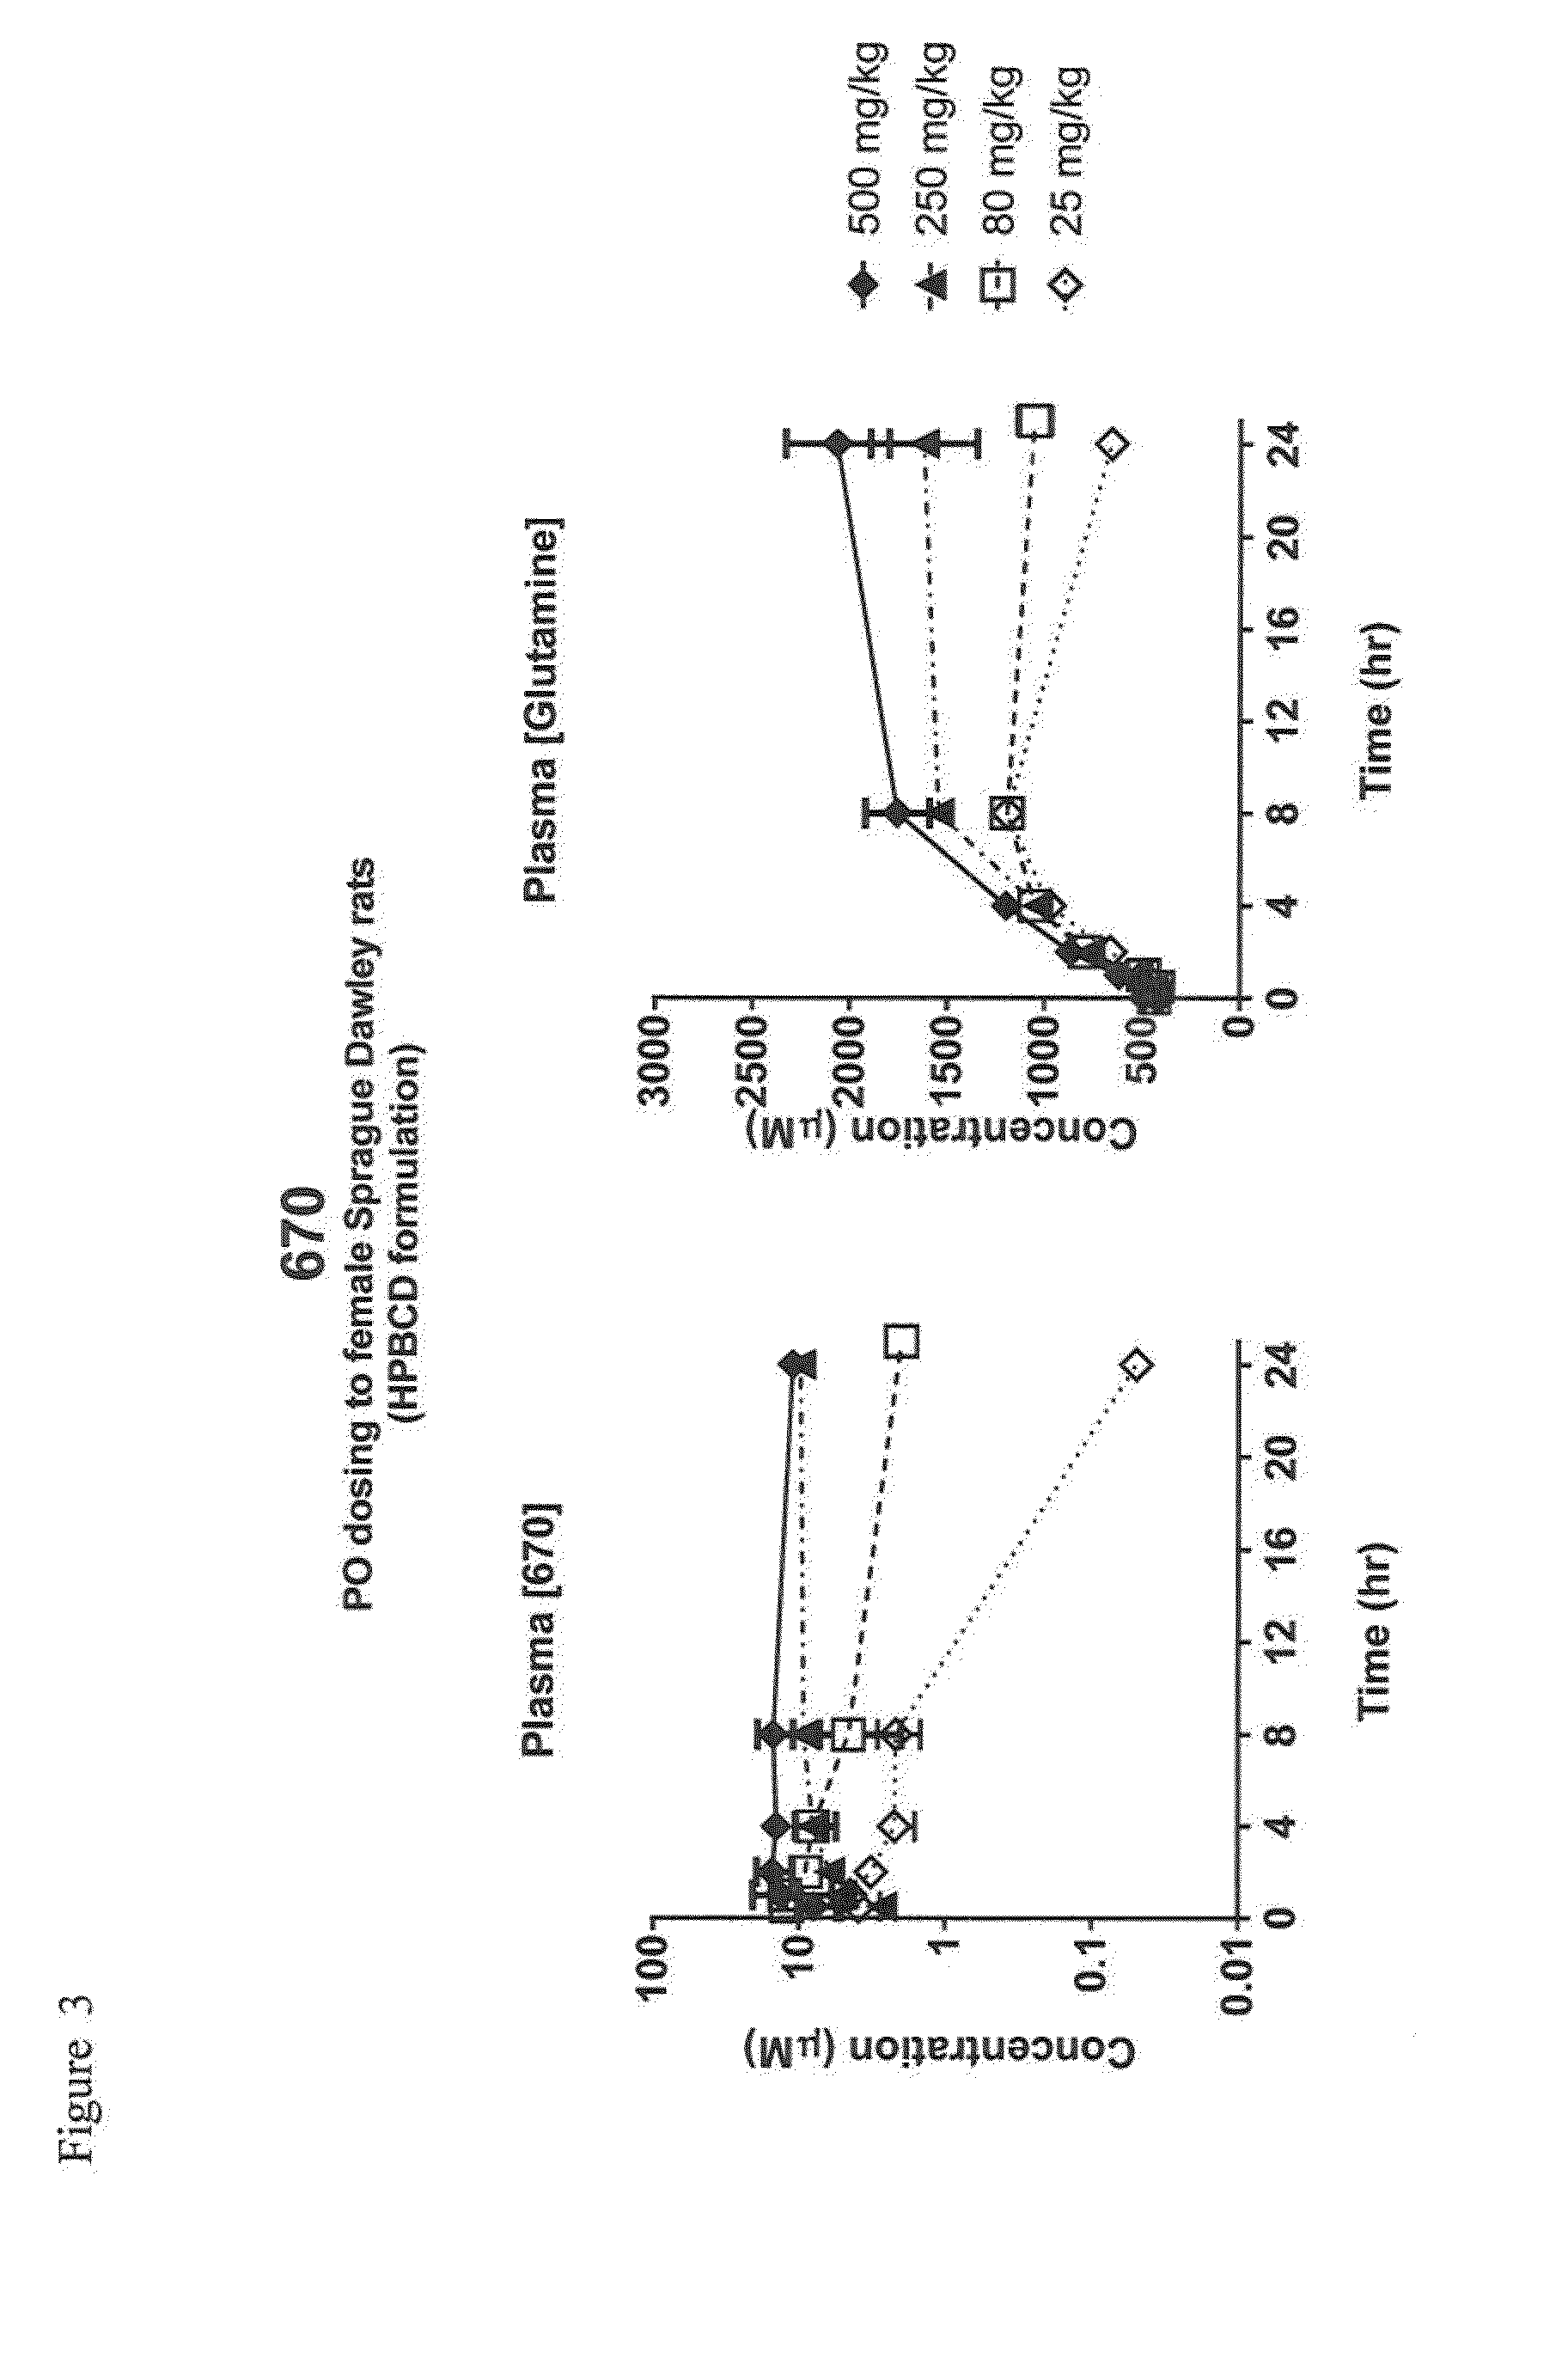 Heterocyclic glutaminase inhibitors